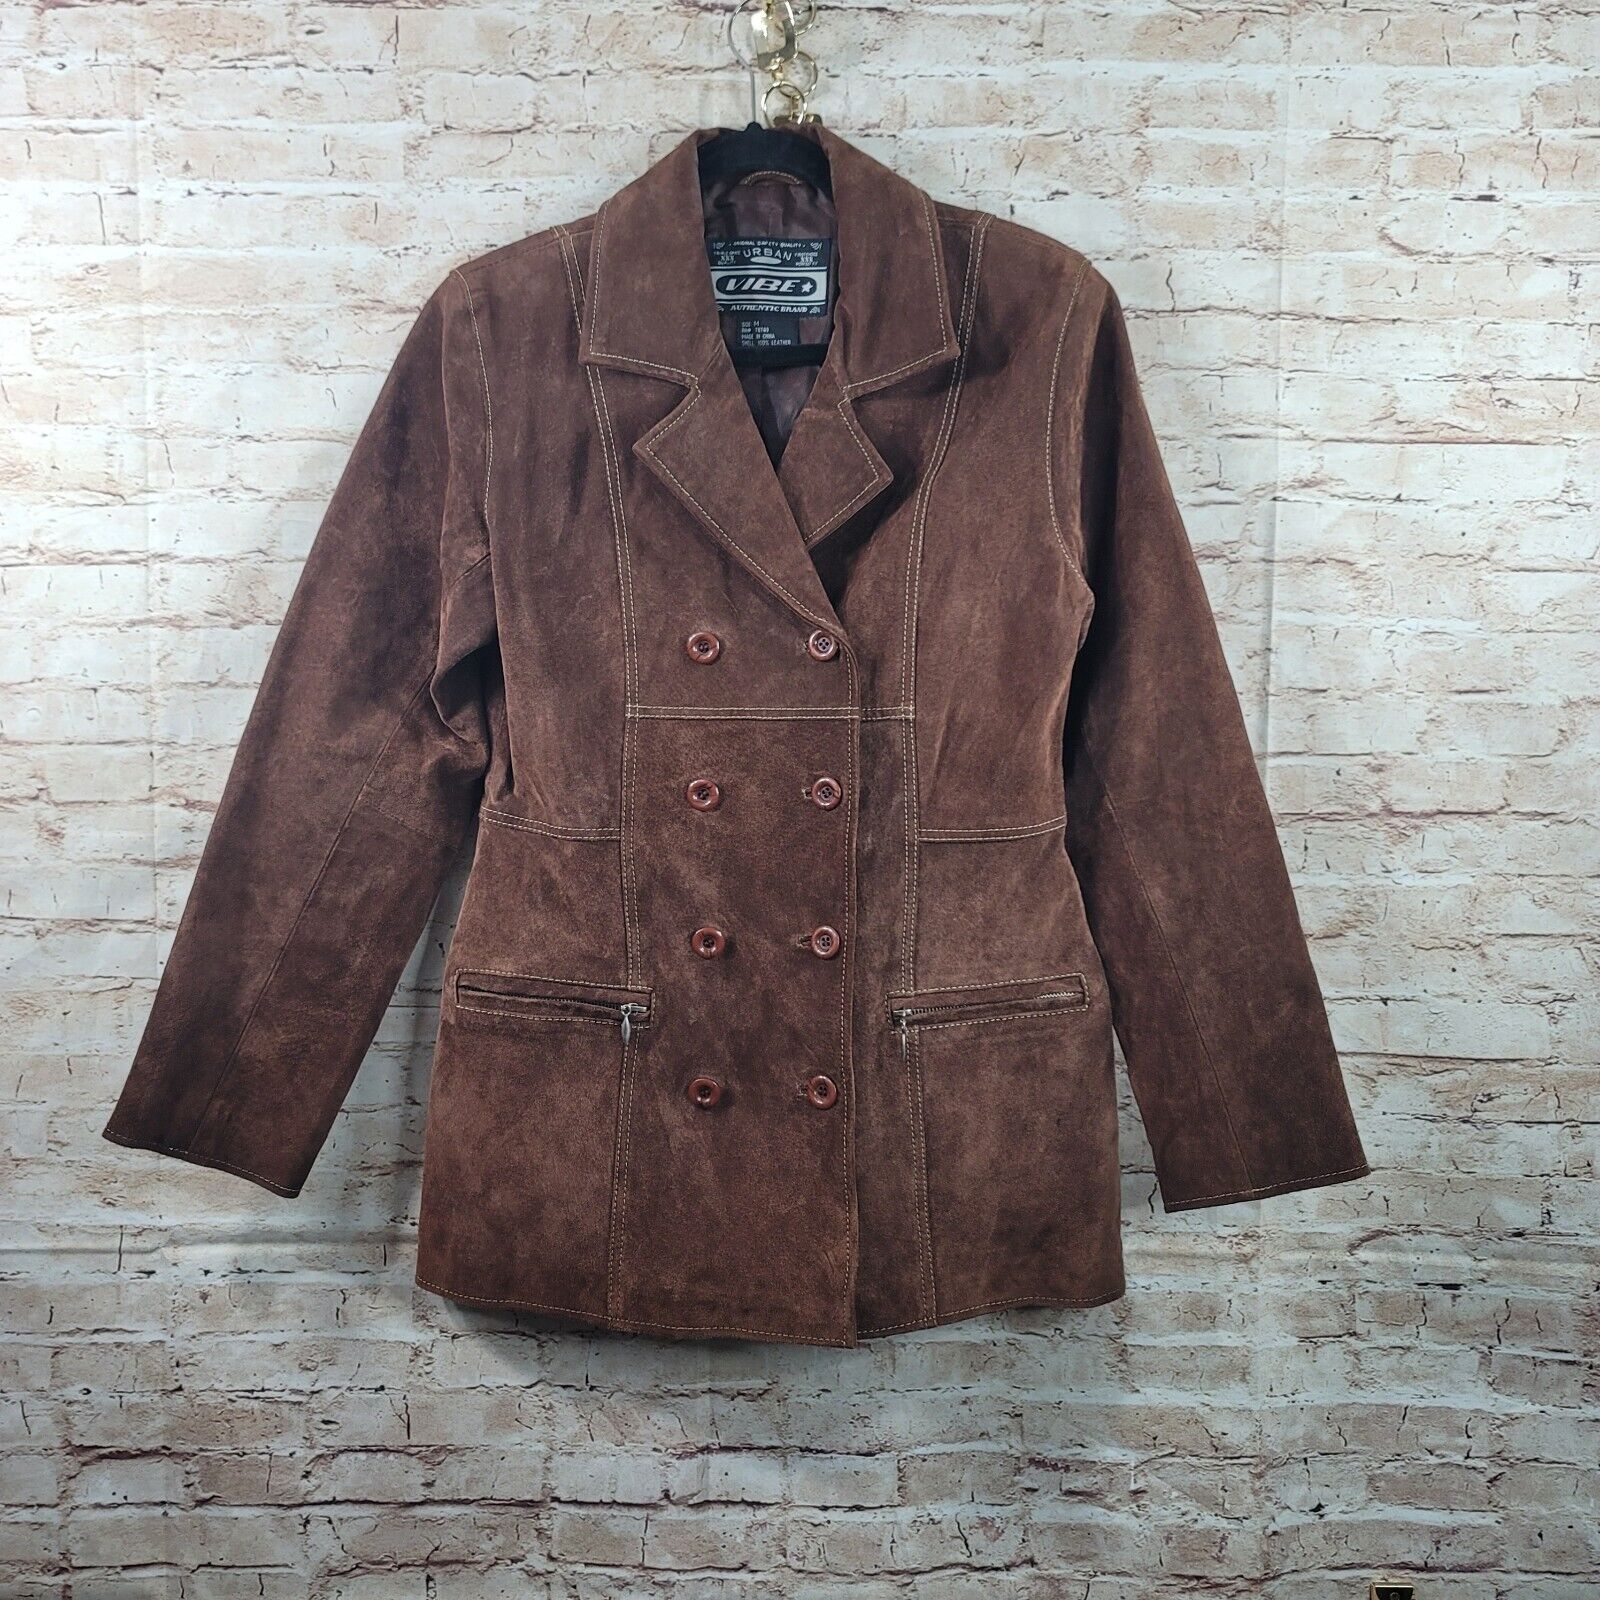 Urban Vibe Suede Womans Jacket Medium Brown Genuine Leather Zipped Pockets Y2K